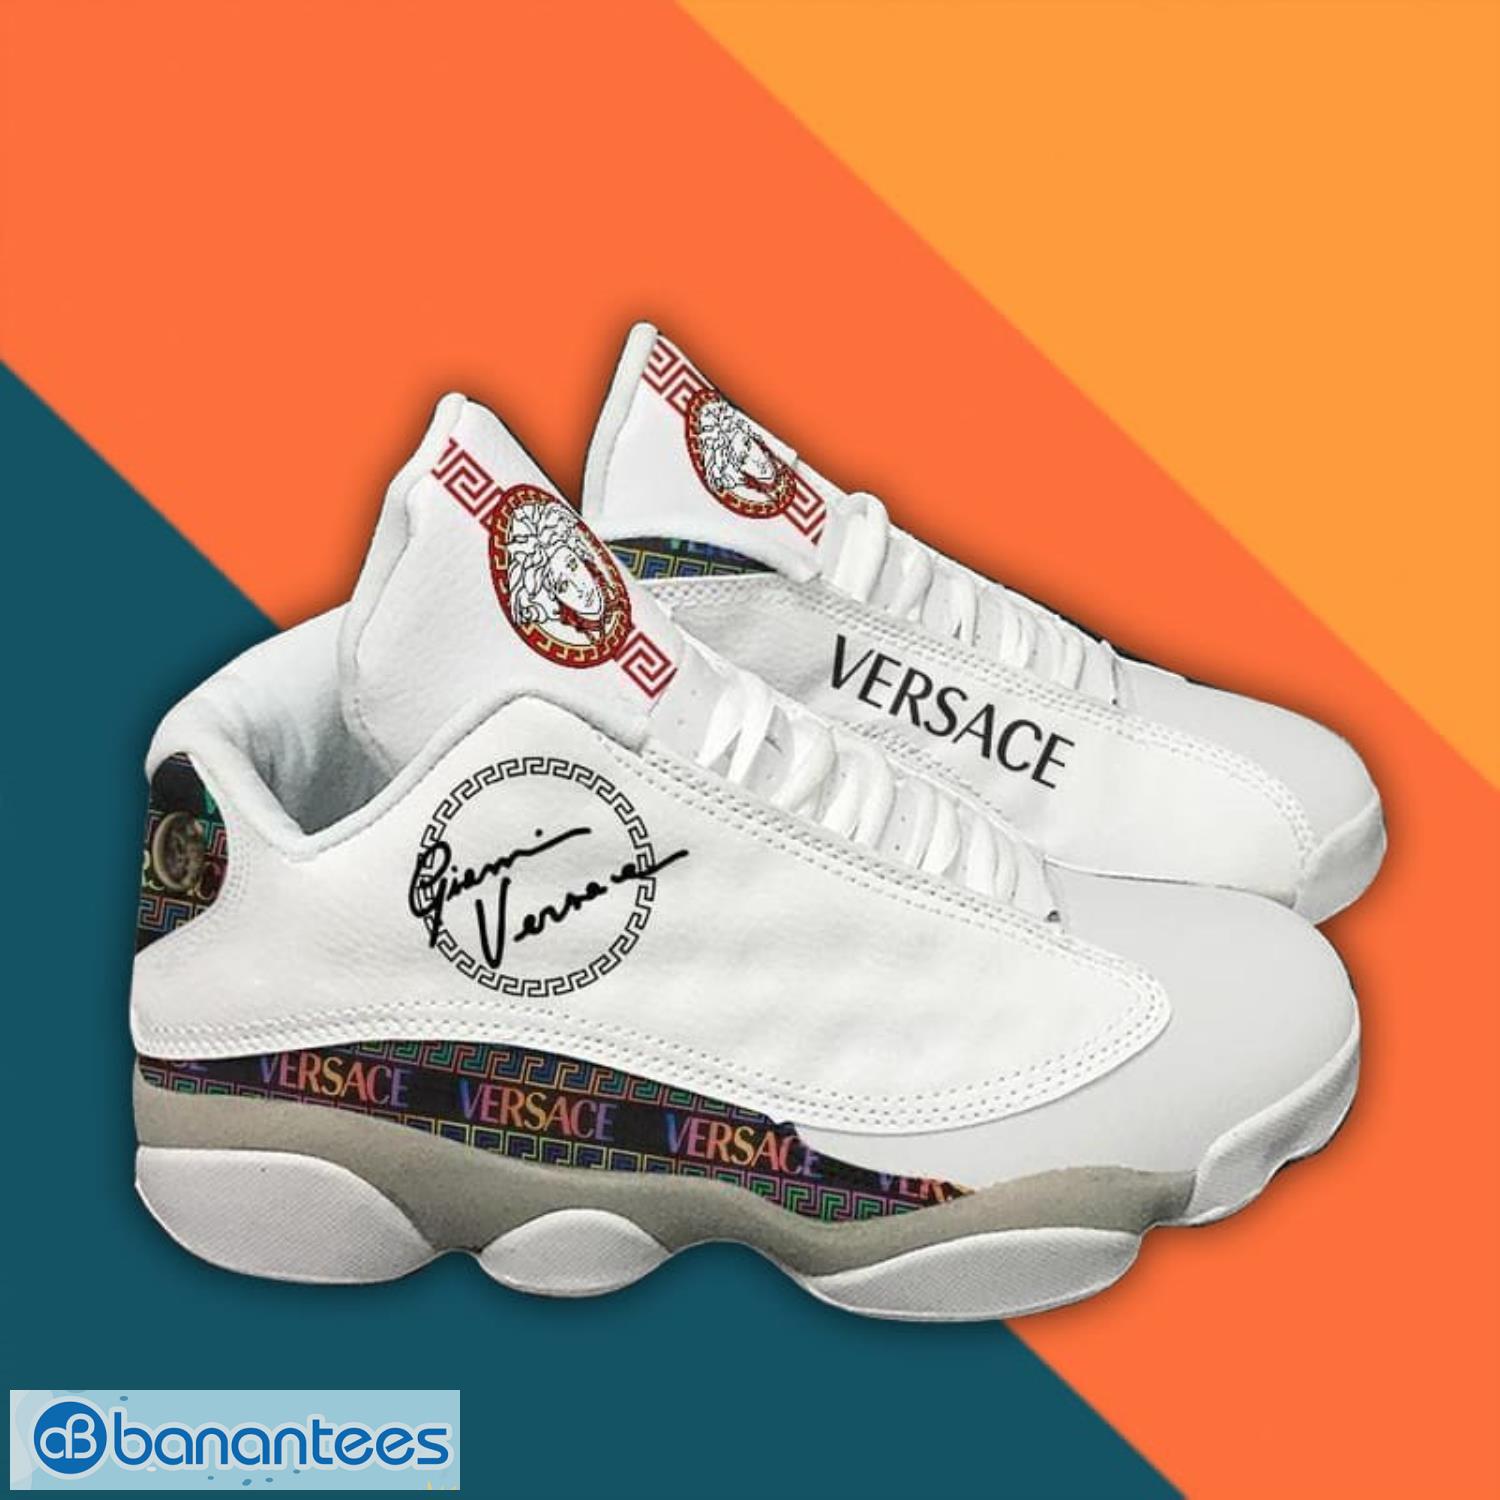 Versace Air Jordan 13 Sneaker Shoes Product Photo 1